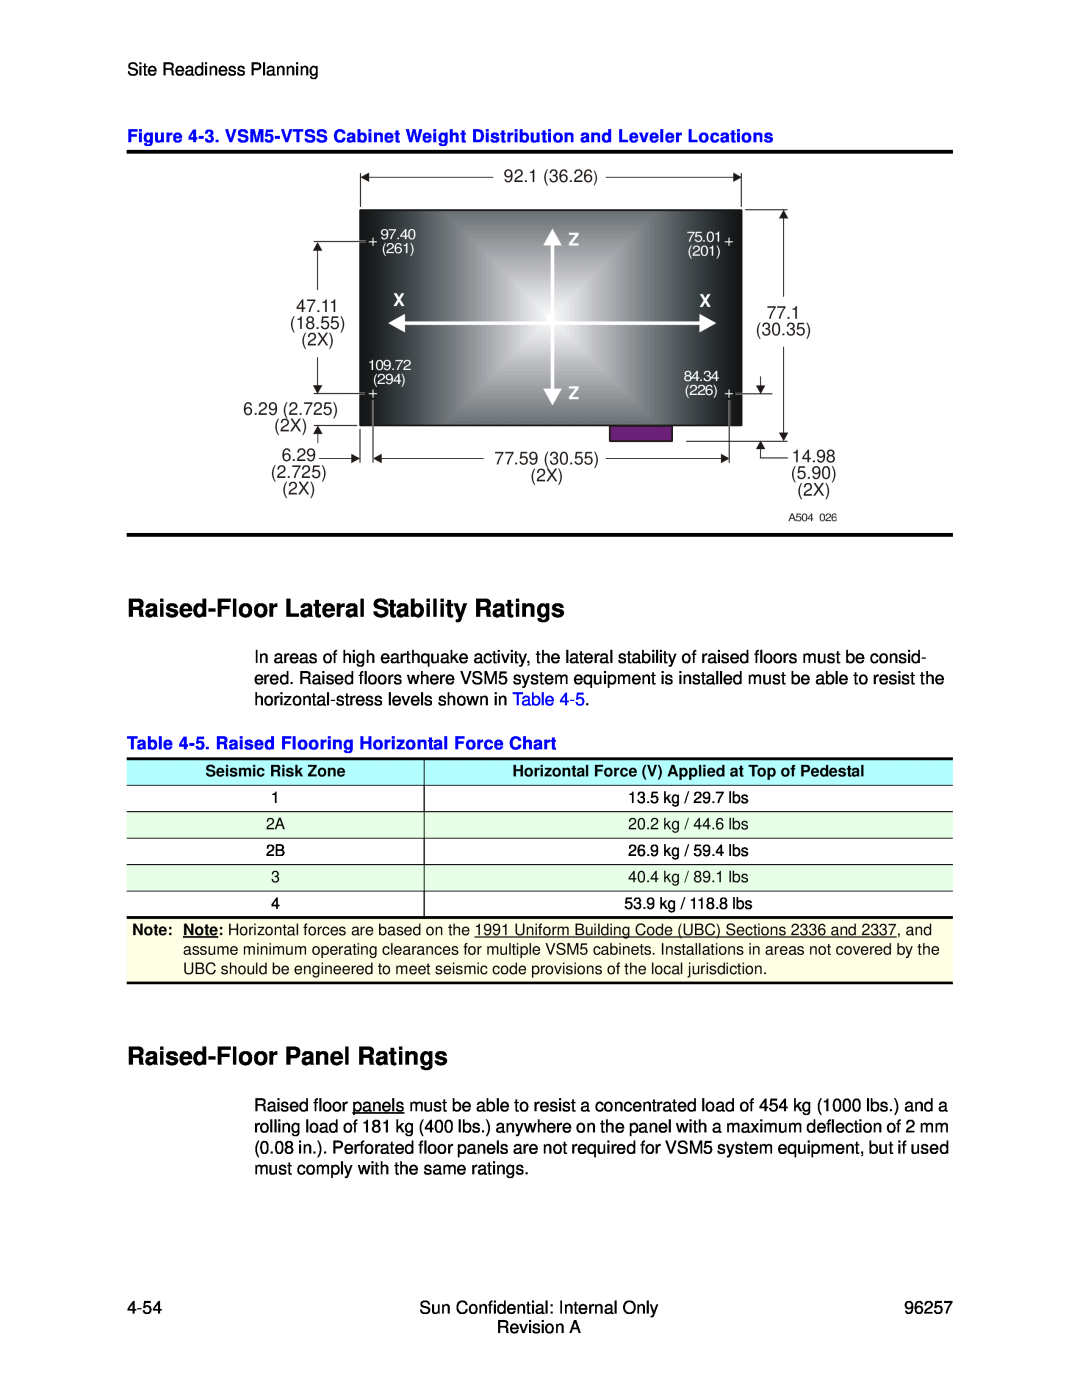 Sun Microsystems 96257 Raised-Floor Lateral Stability Ratings, Raised-Floor Panel Ratings, 92.1, 77.1, 30.35, 14.98, 77.59 